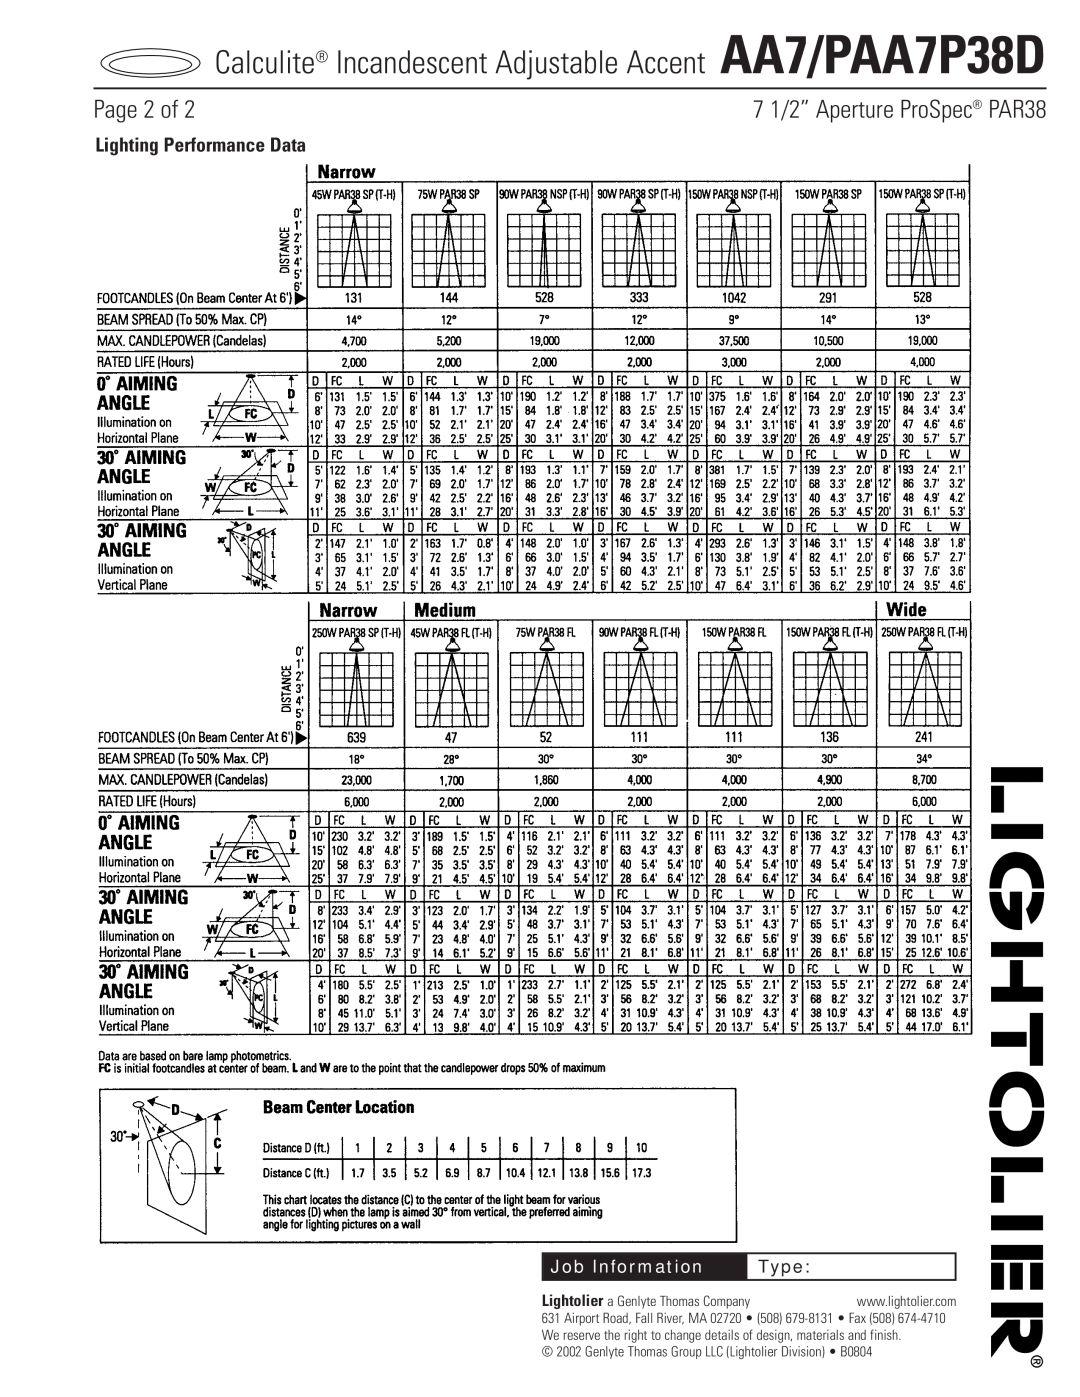 Lightolier AA7/PAA7P38D Page 2 of, Lighting Performance Data, 7 1/2” Aperture ProSpec PAR38, Job Information, Type 